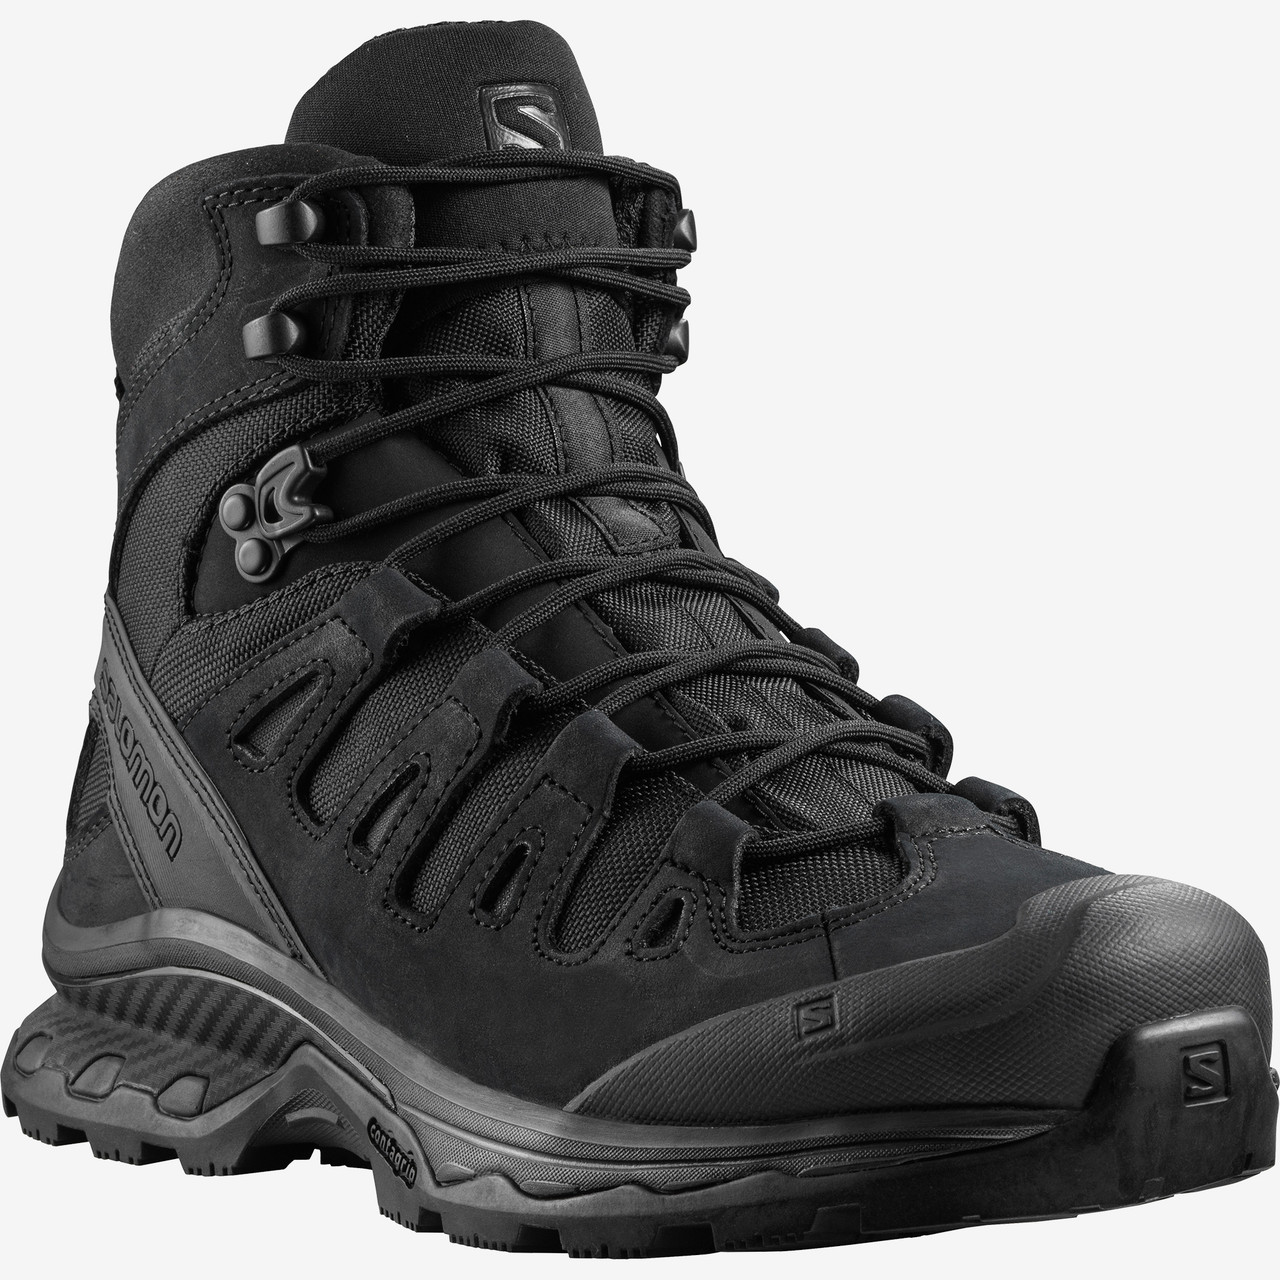 Salomon L40682500 Quest 4D Forces 2 EN Unisex 6 inch Boots, Uniform or Casual, Oil and Slip Resistant, available in Black